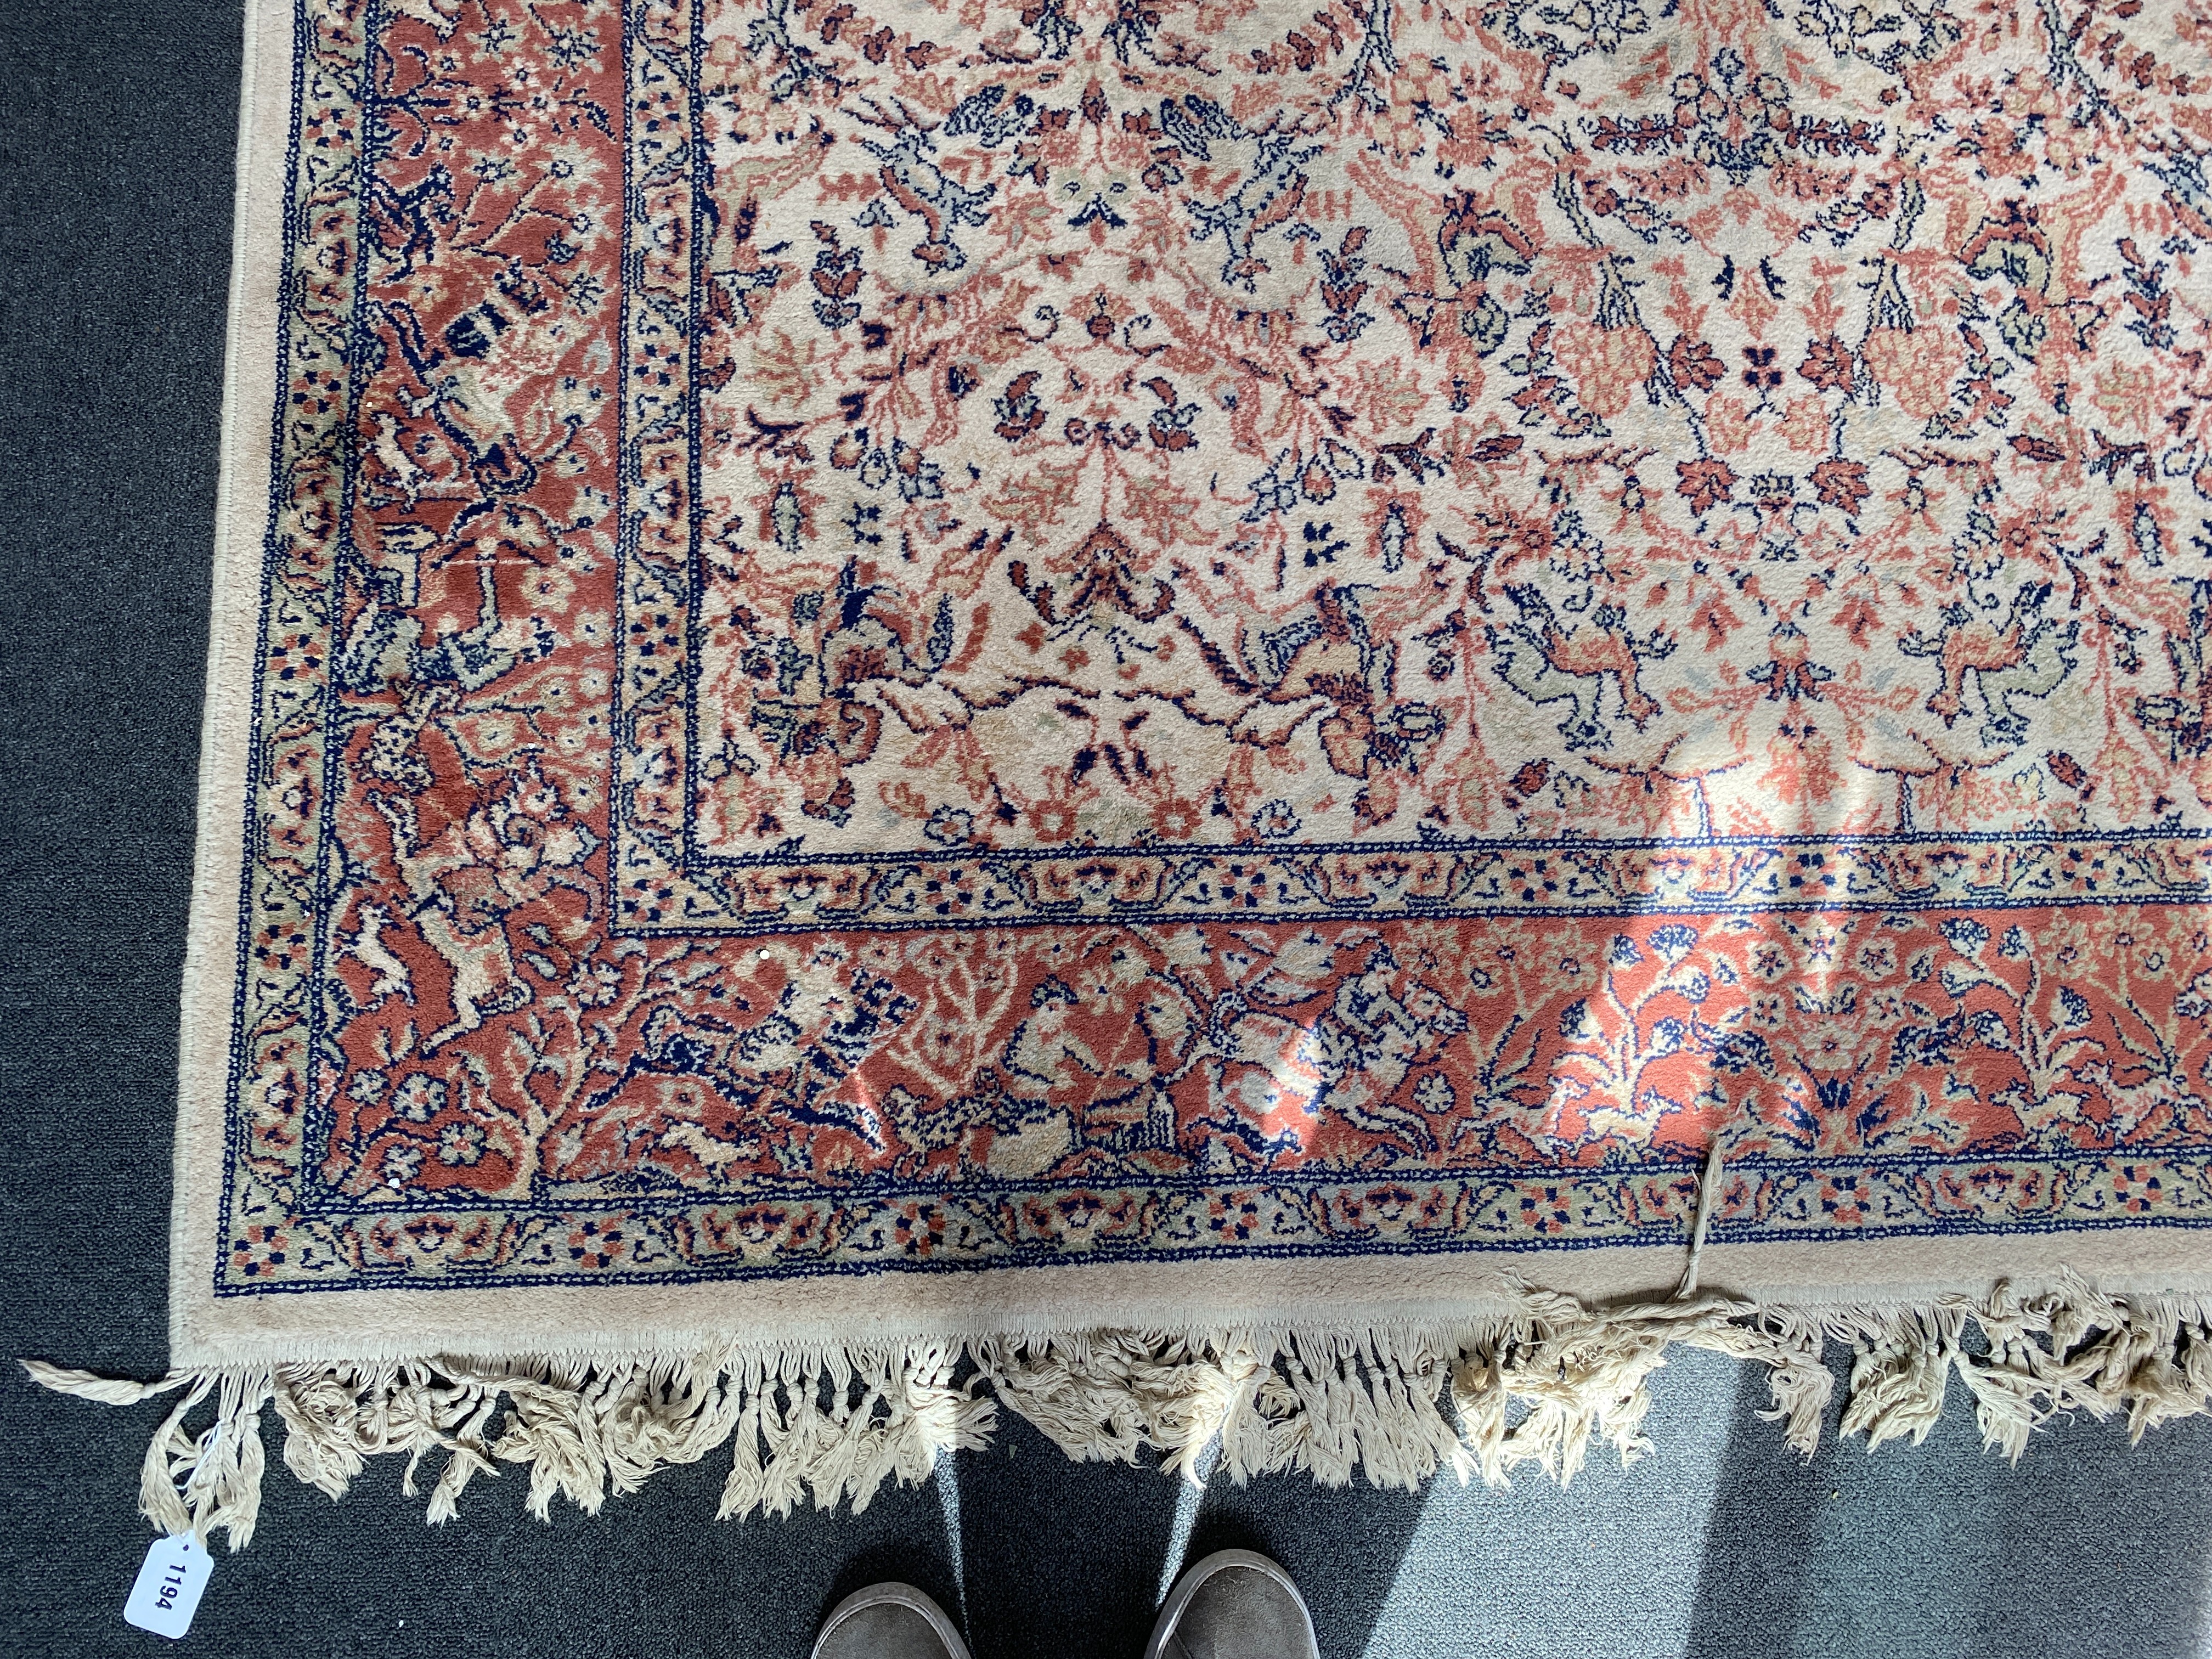 A Kashan ivory ground pictorial carpet, 296 x 200cm